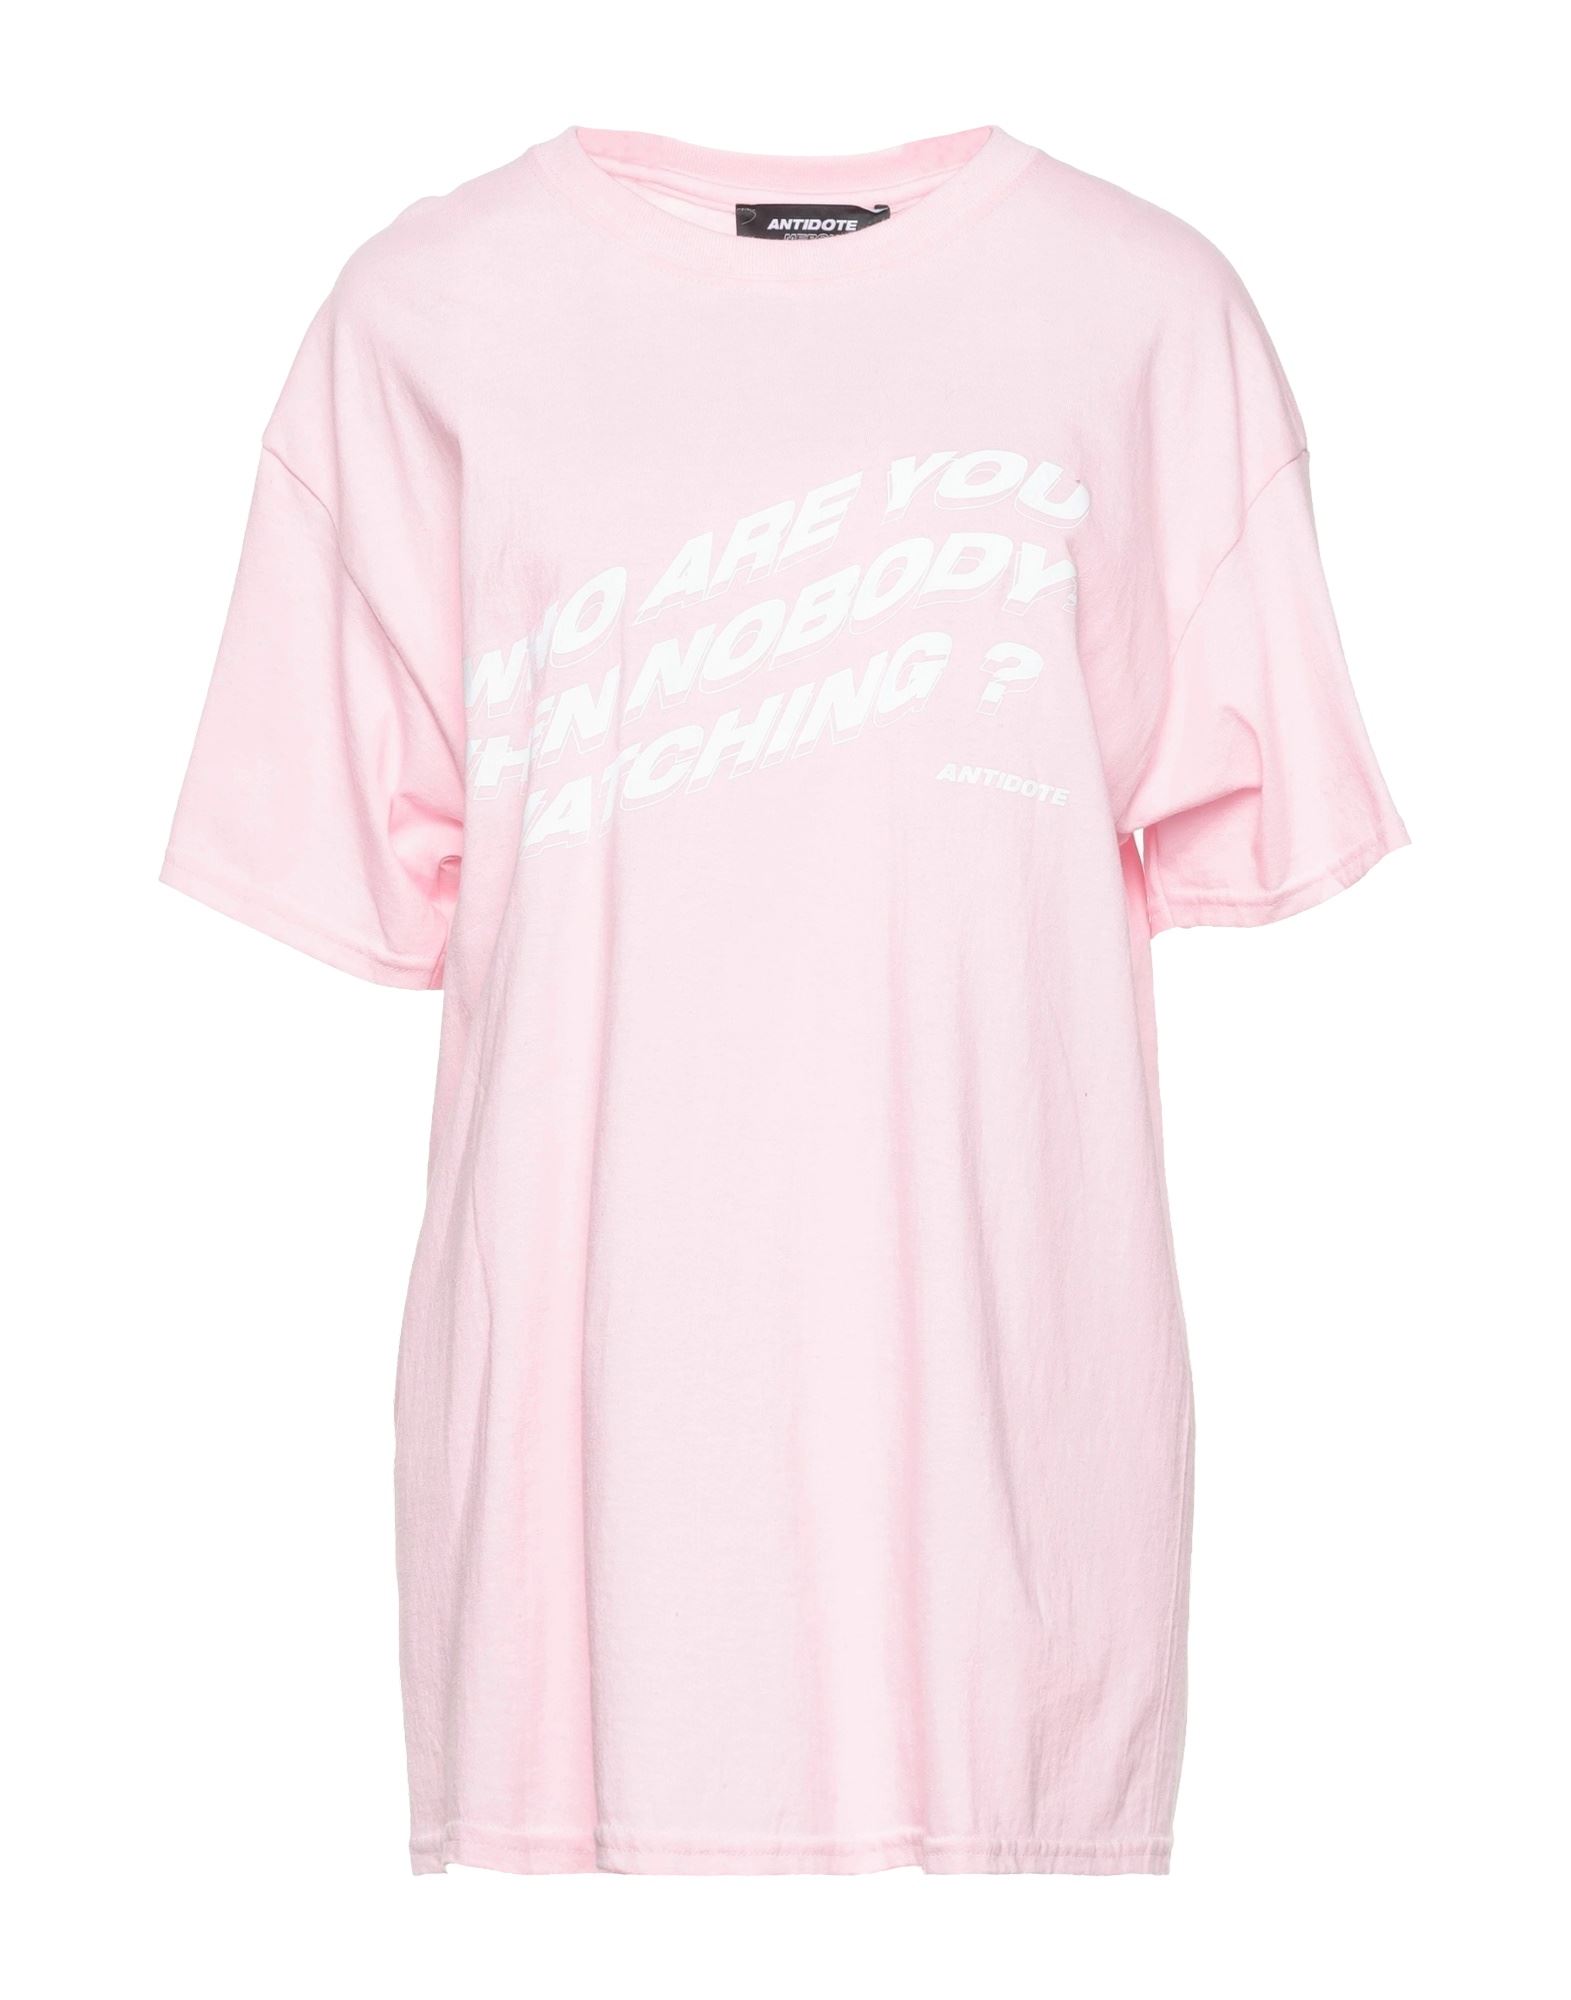 Antidote T-shirts In Pink